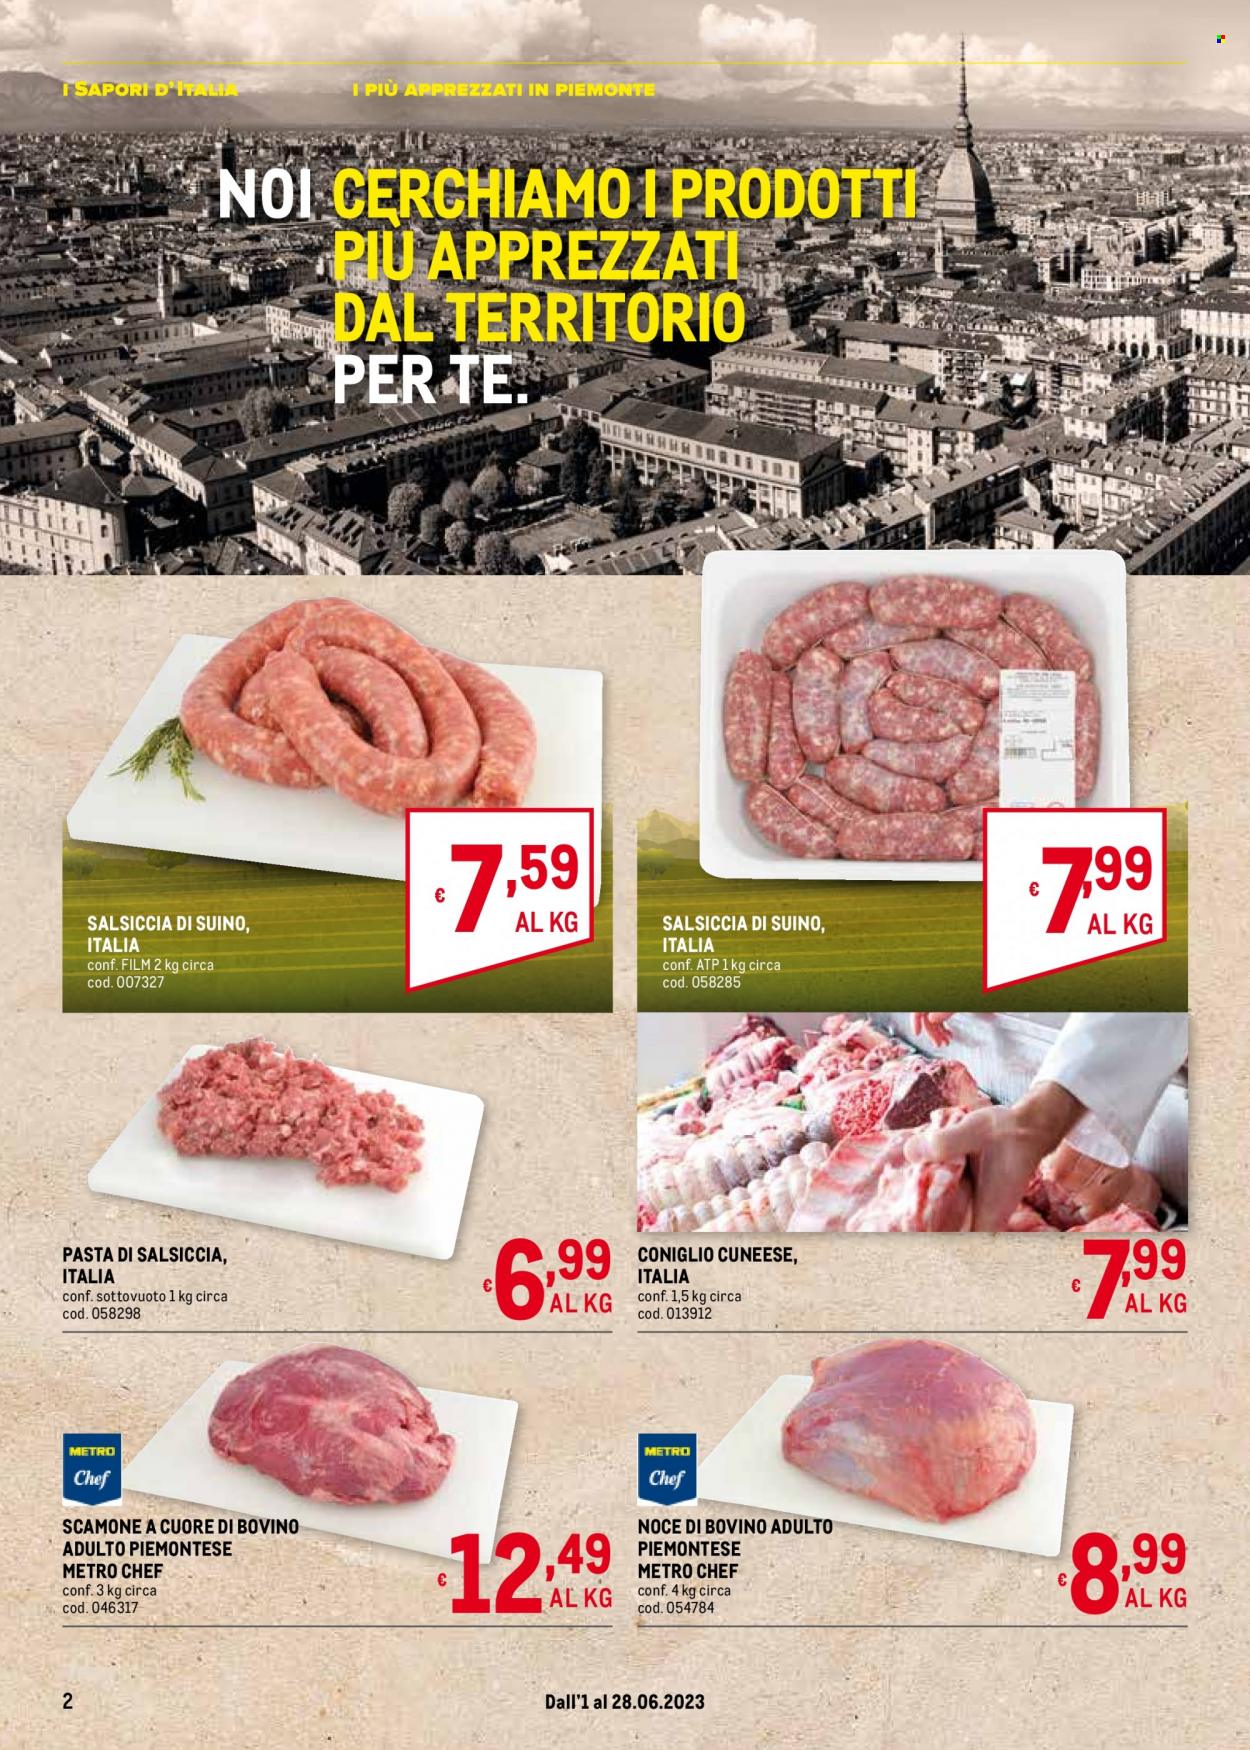 thumbnail - Volantino Metro - 1/6/2023 - 28/6/2023 - Prodotti in offerta - manzo, pasta, pellet. Pagina 2.